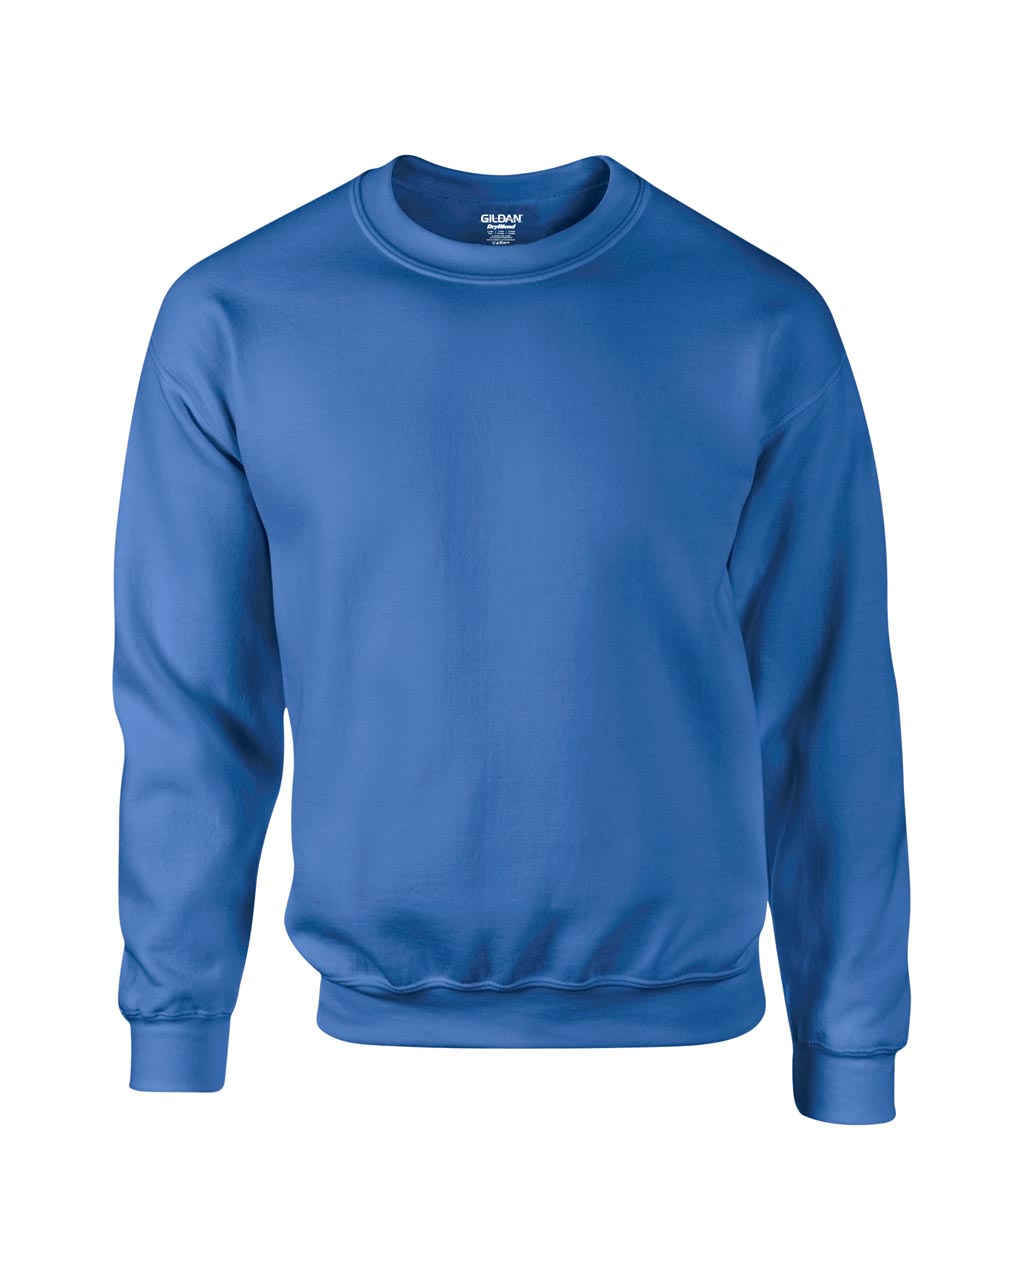 Albastru royal Sweater unisex Gildan Dry Blend 50%bumbac 50%poliester 305 g/mp interior pufos